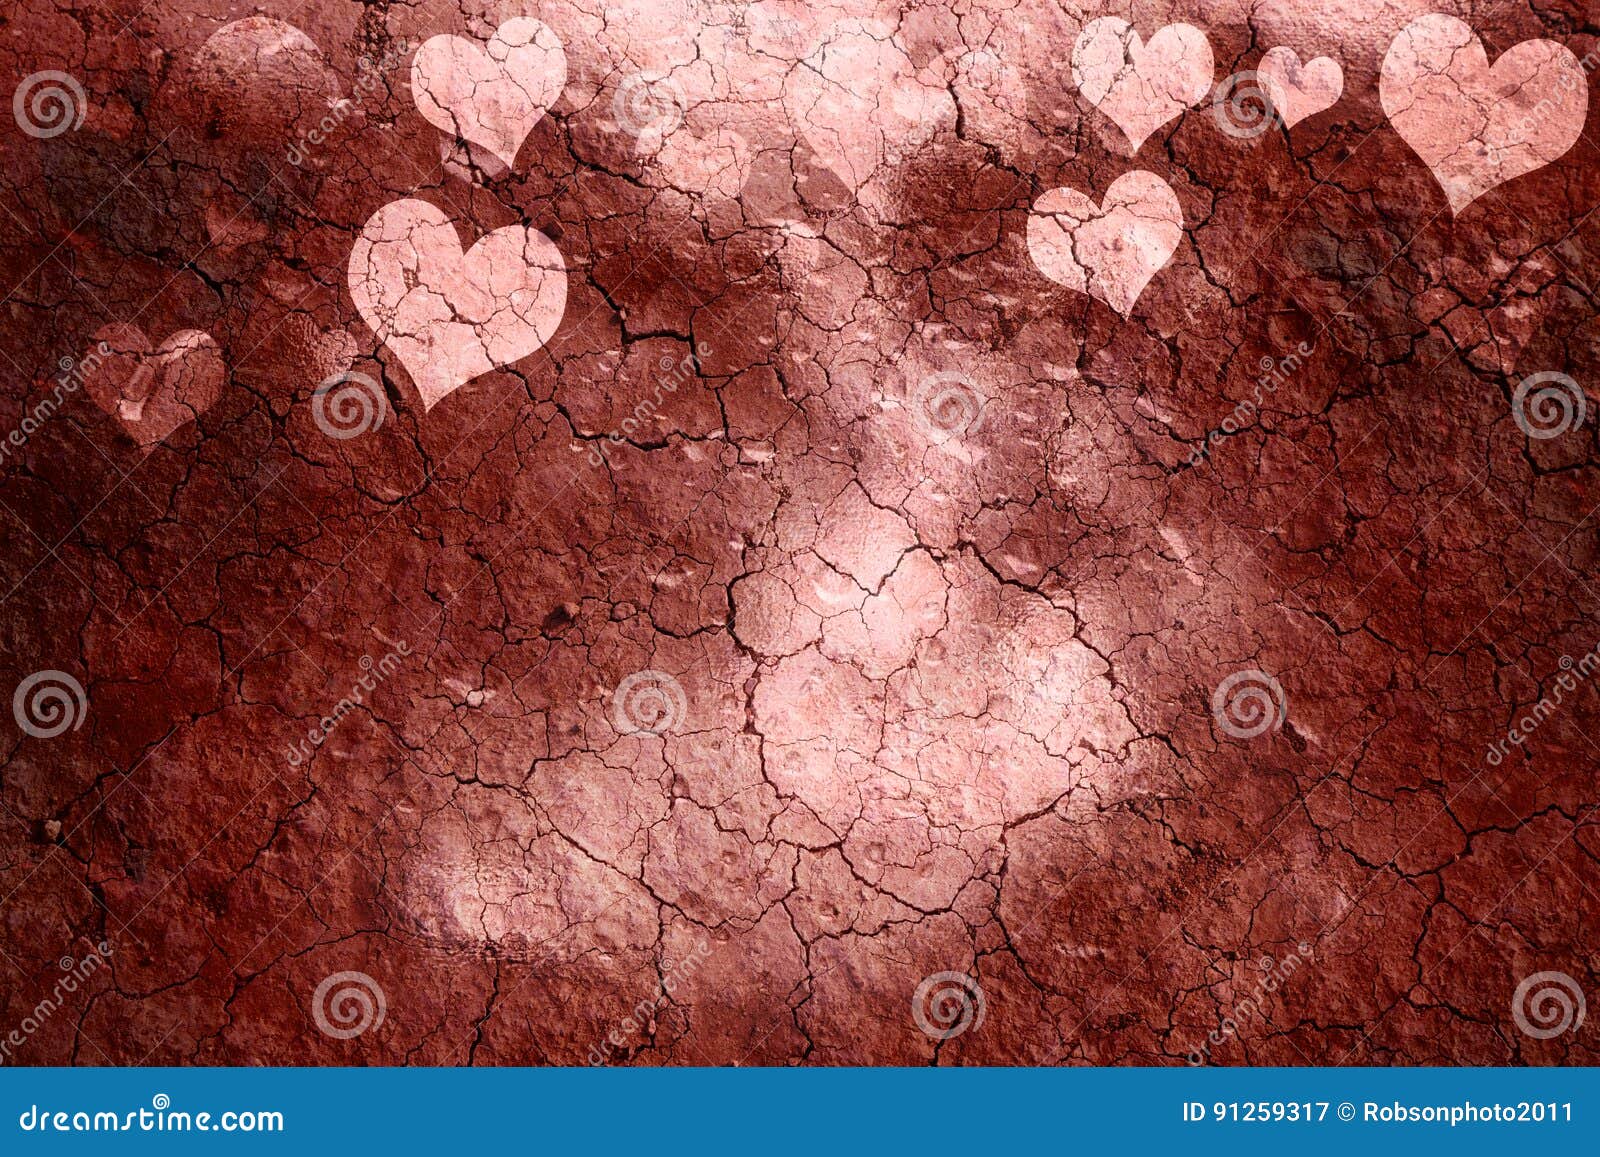 Concept Love Breakup Heart Background Stock Image - Image of breakup,  symbol: 91259317